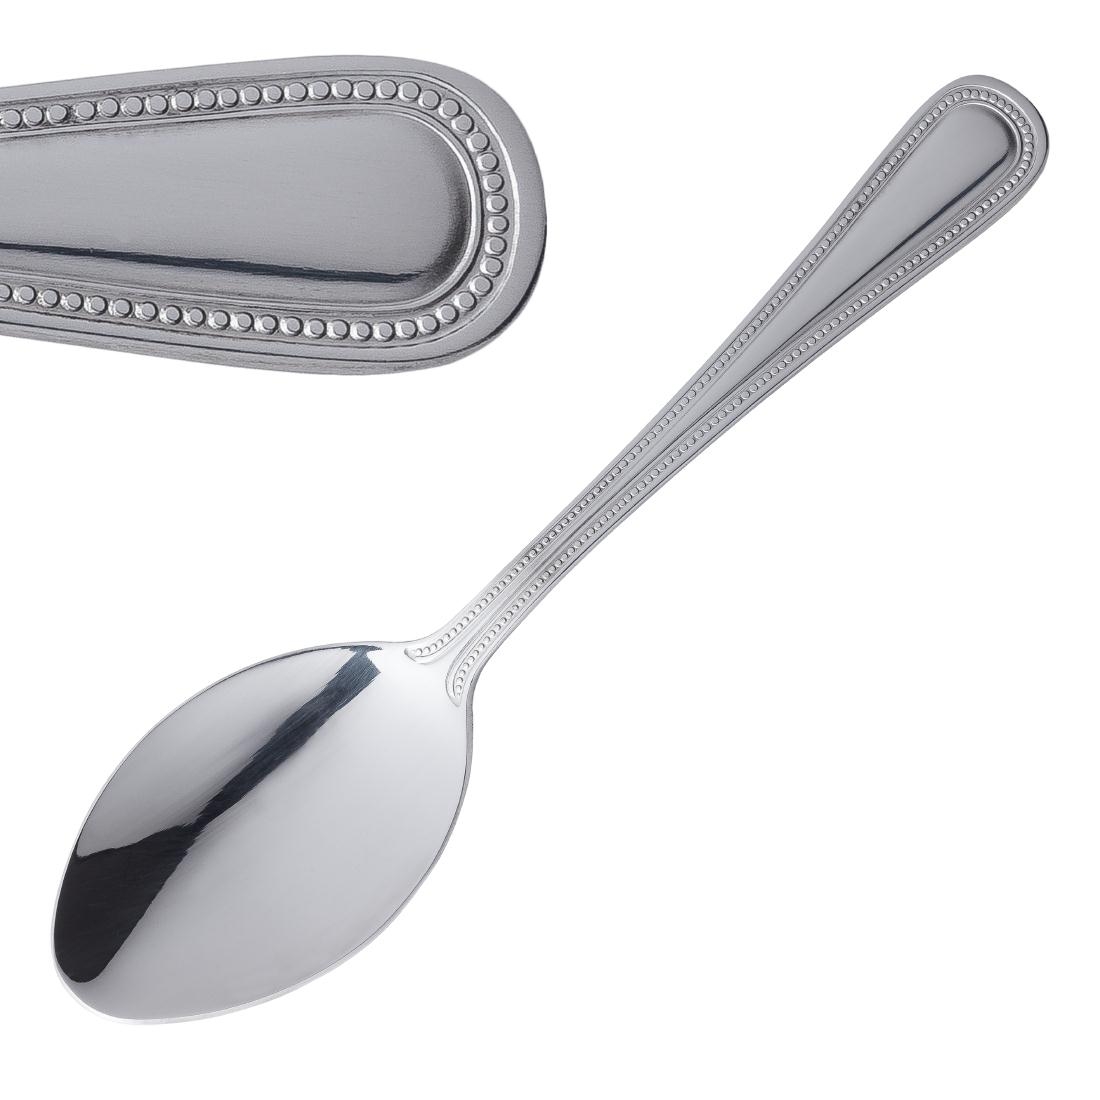 Olympia Bead Service Spoon